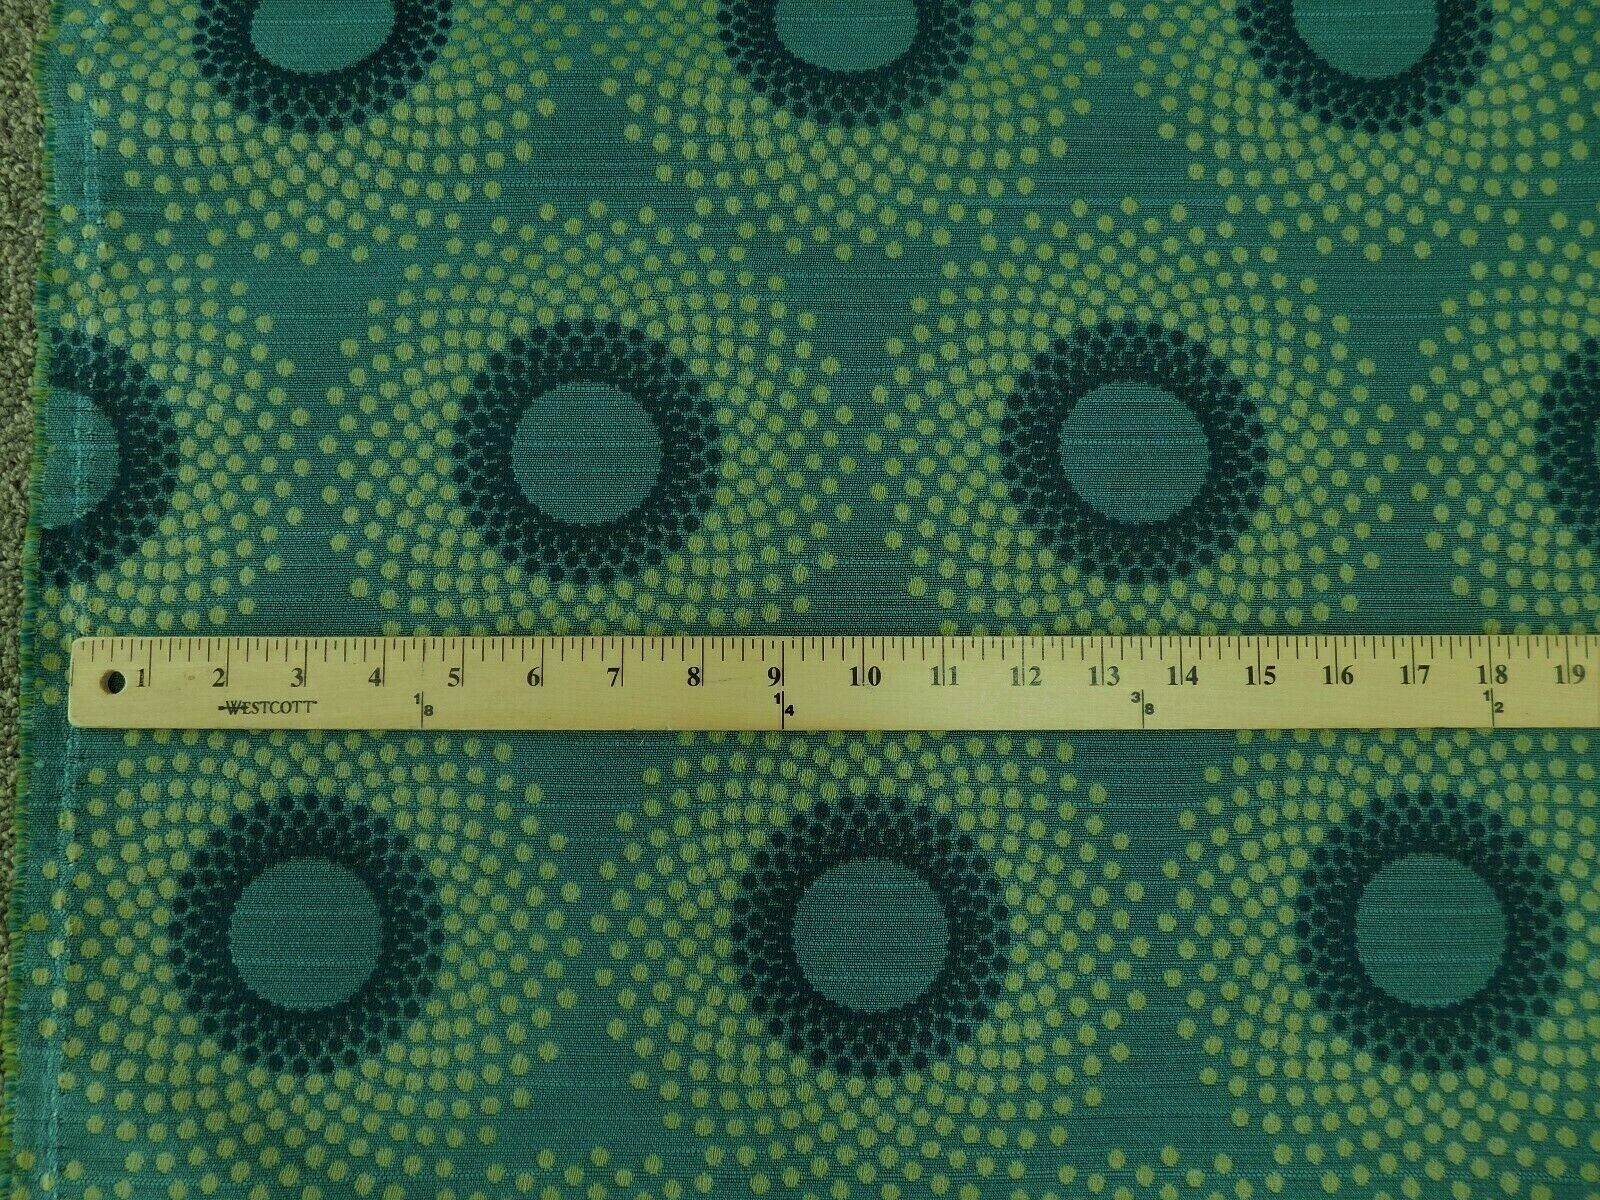 Designtex Phenomena Celeste teal and green Large Modern Circle Upholstery Fabric